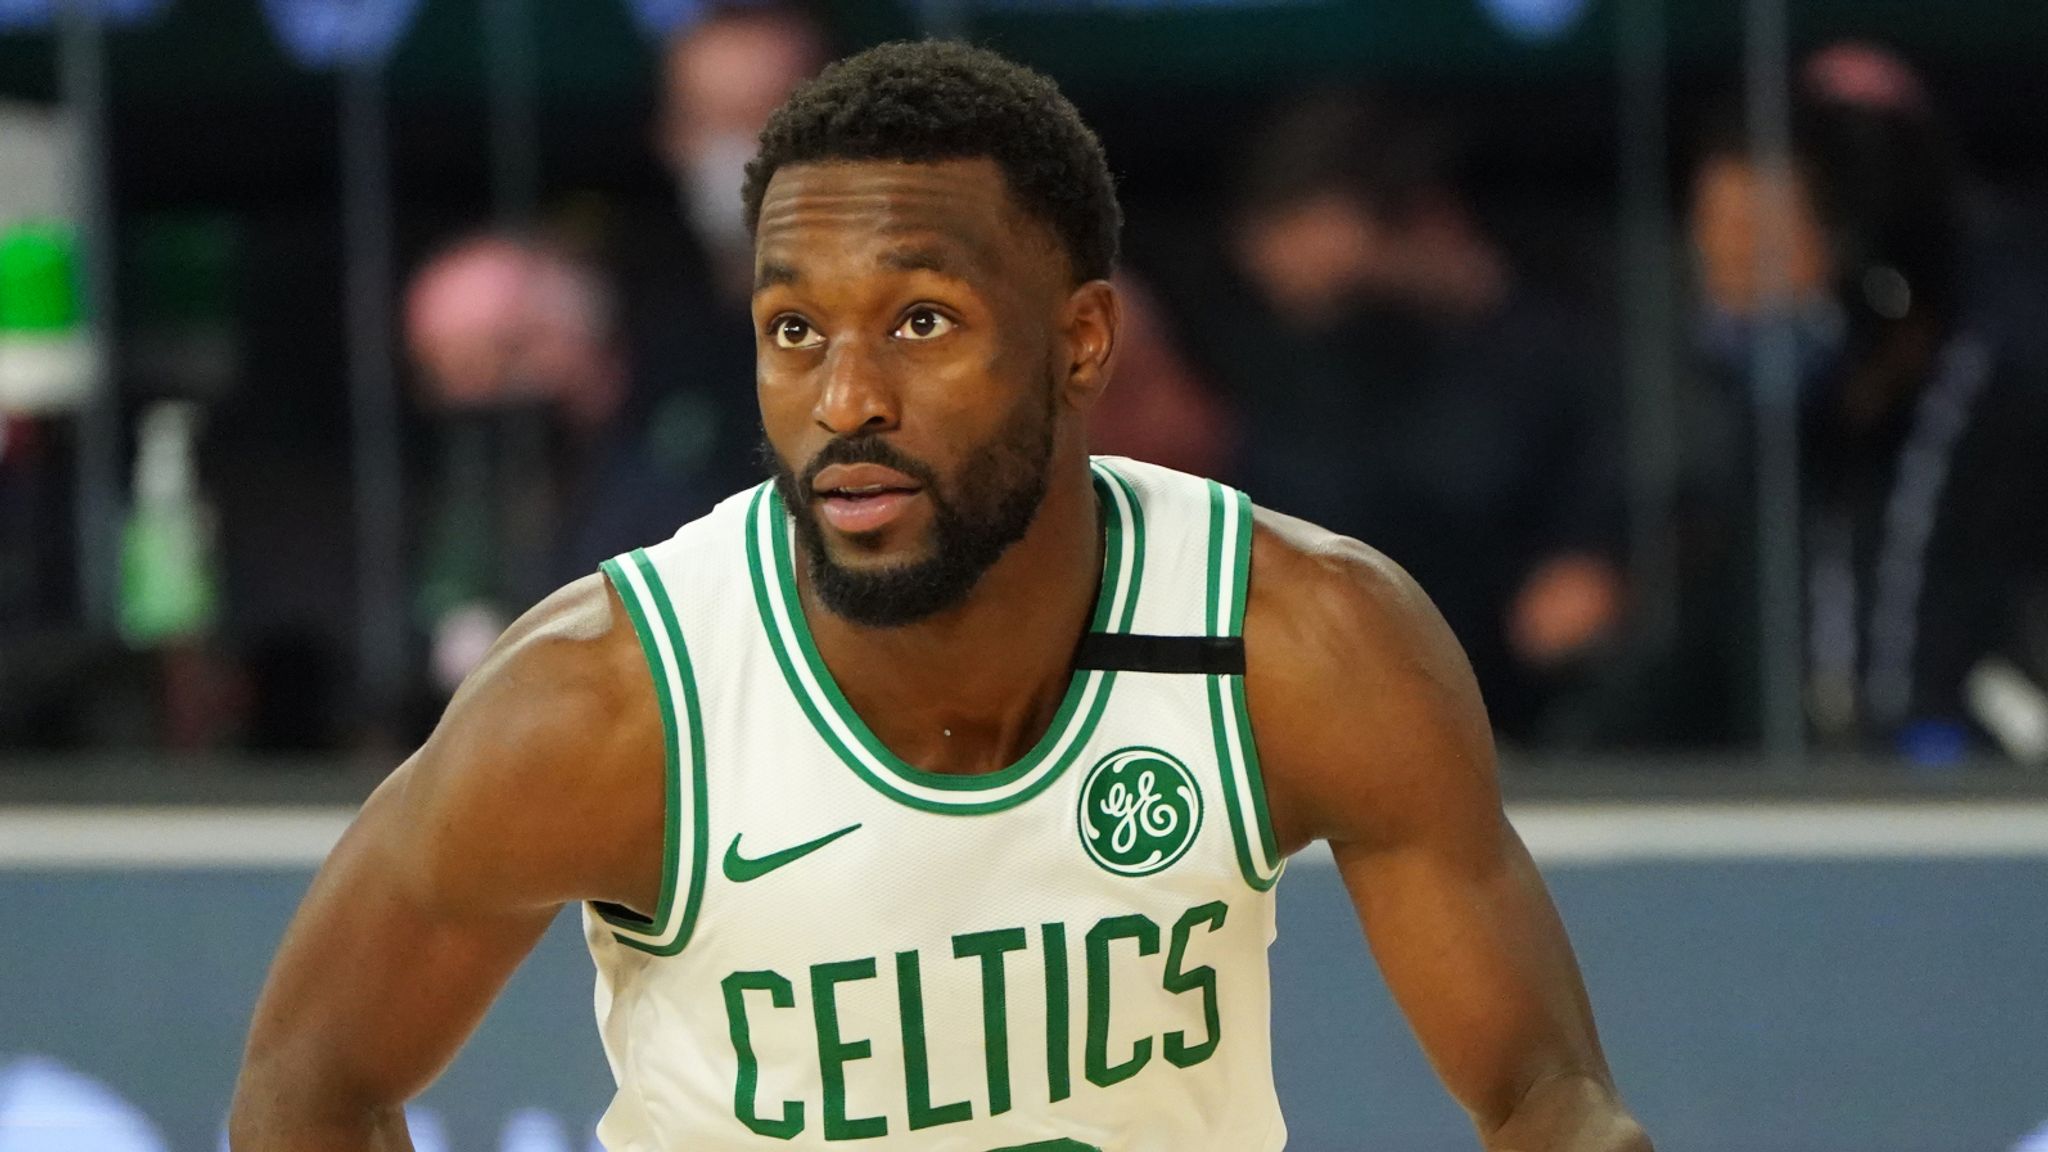 Kemba Boston Celtics all-star point guard out until at least | NBA News | Sky Sports